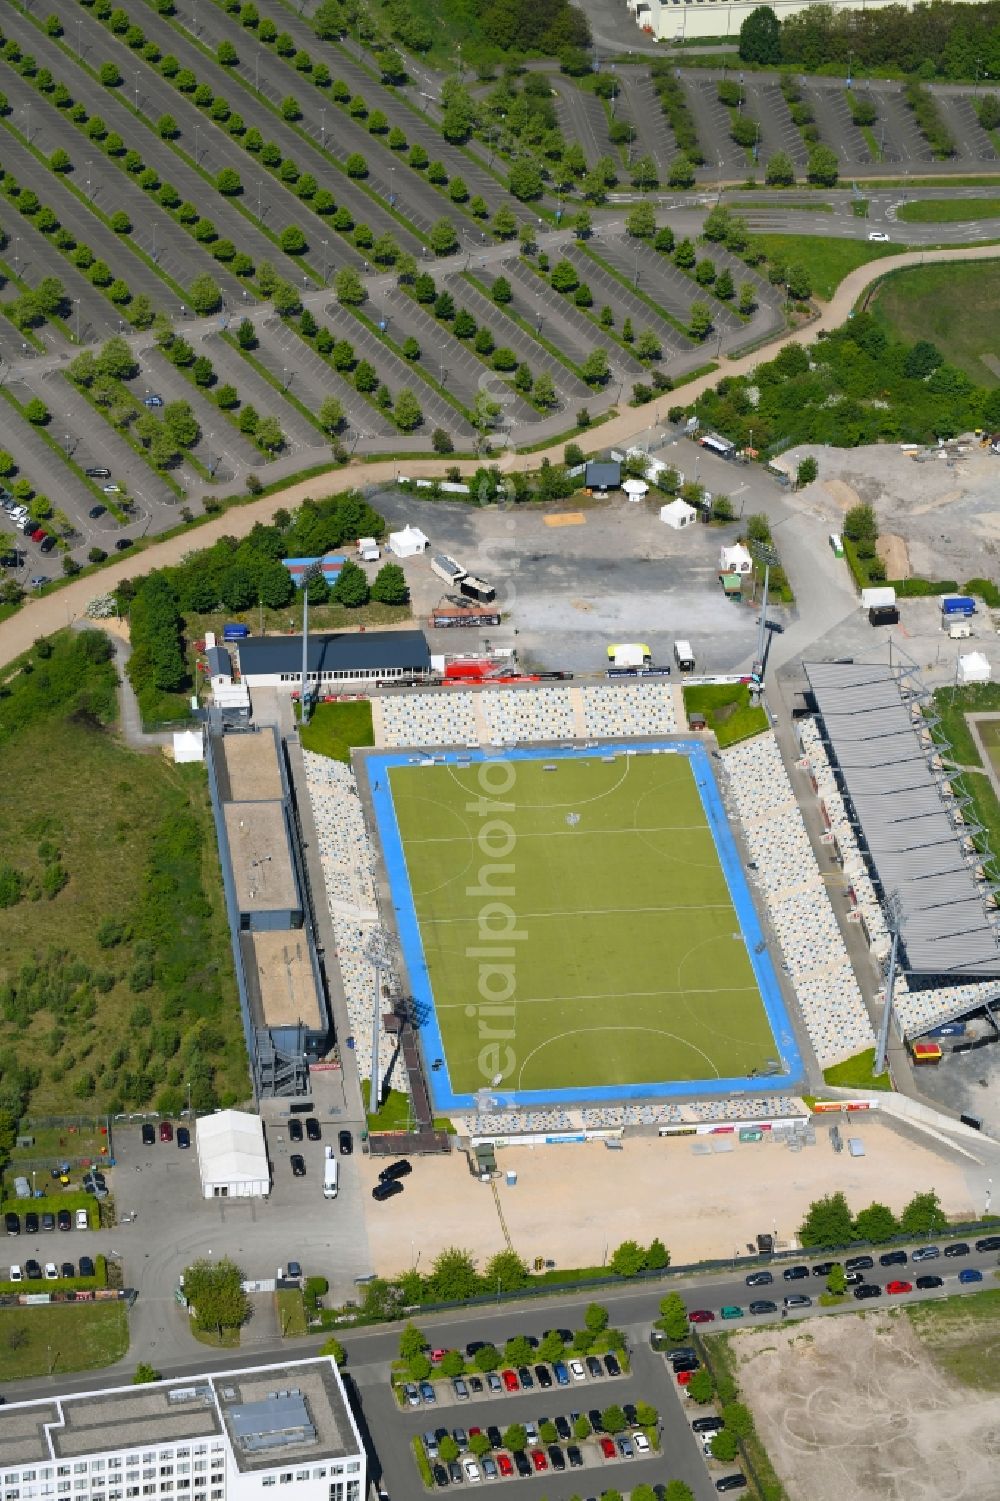 Aerial image Mönchengladbach - Sports facility grounds of the Arena stadium SparkassenPark Moenchengladbach Am Hockeypark in Moenchengladbach in the state North Rhine-Westphalia, Germany